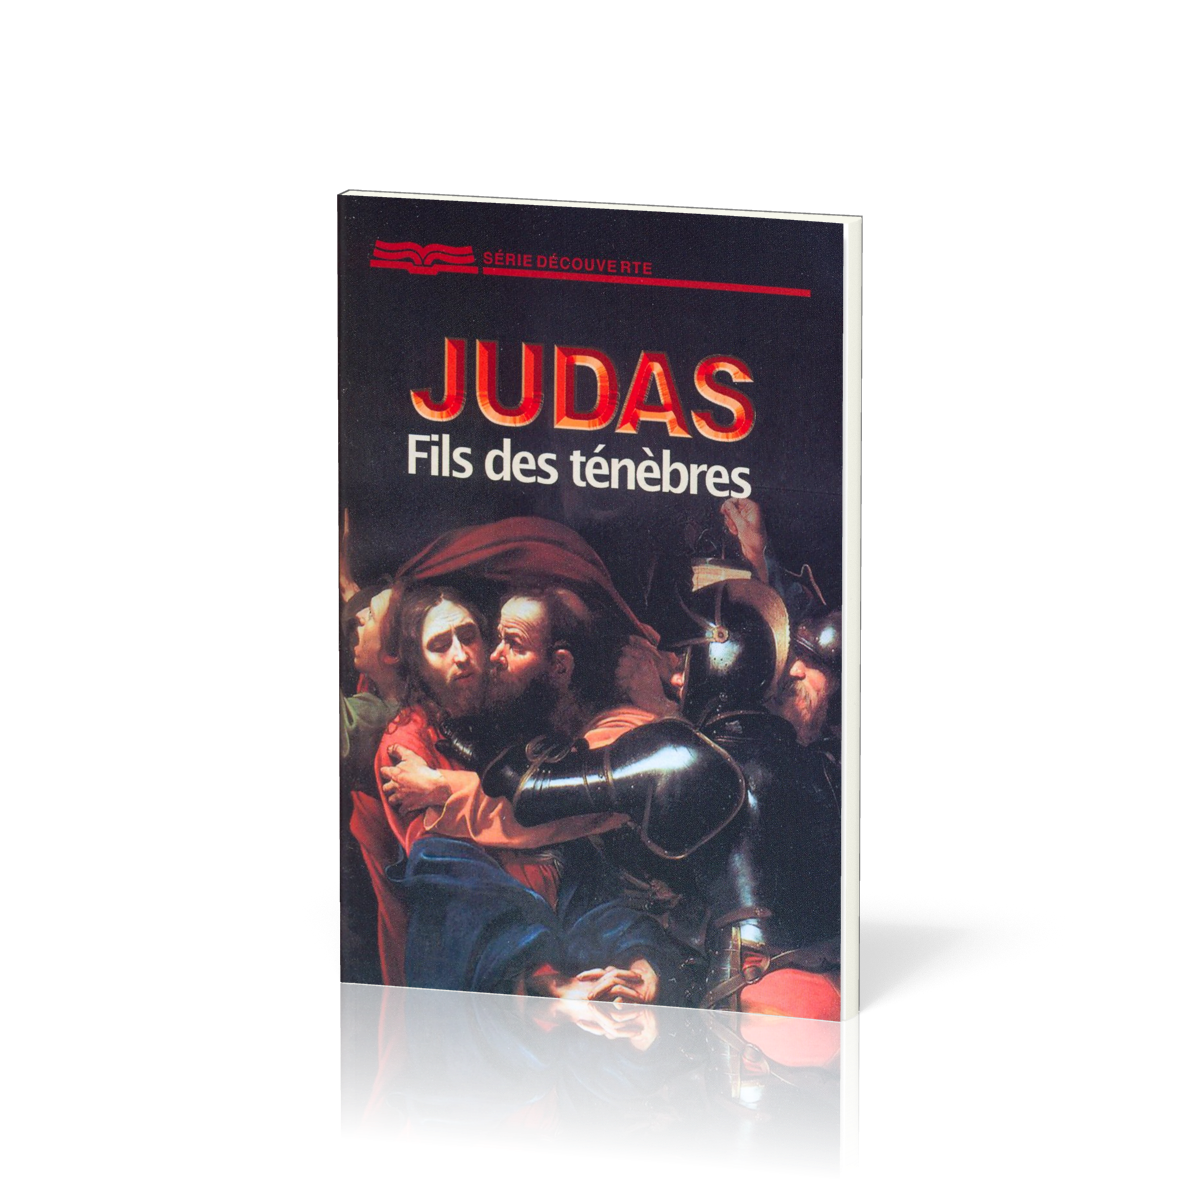 Judas fils des ténèbres  - [Série Découverte]